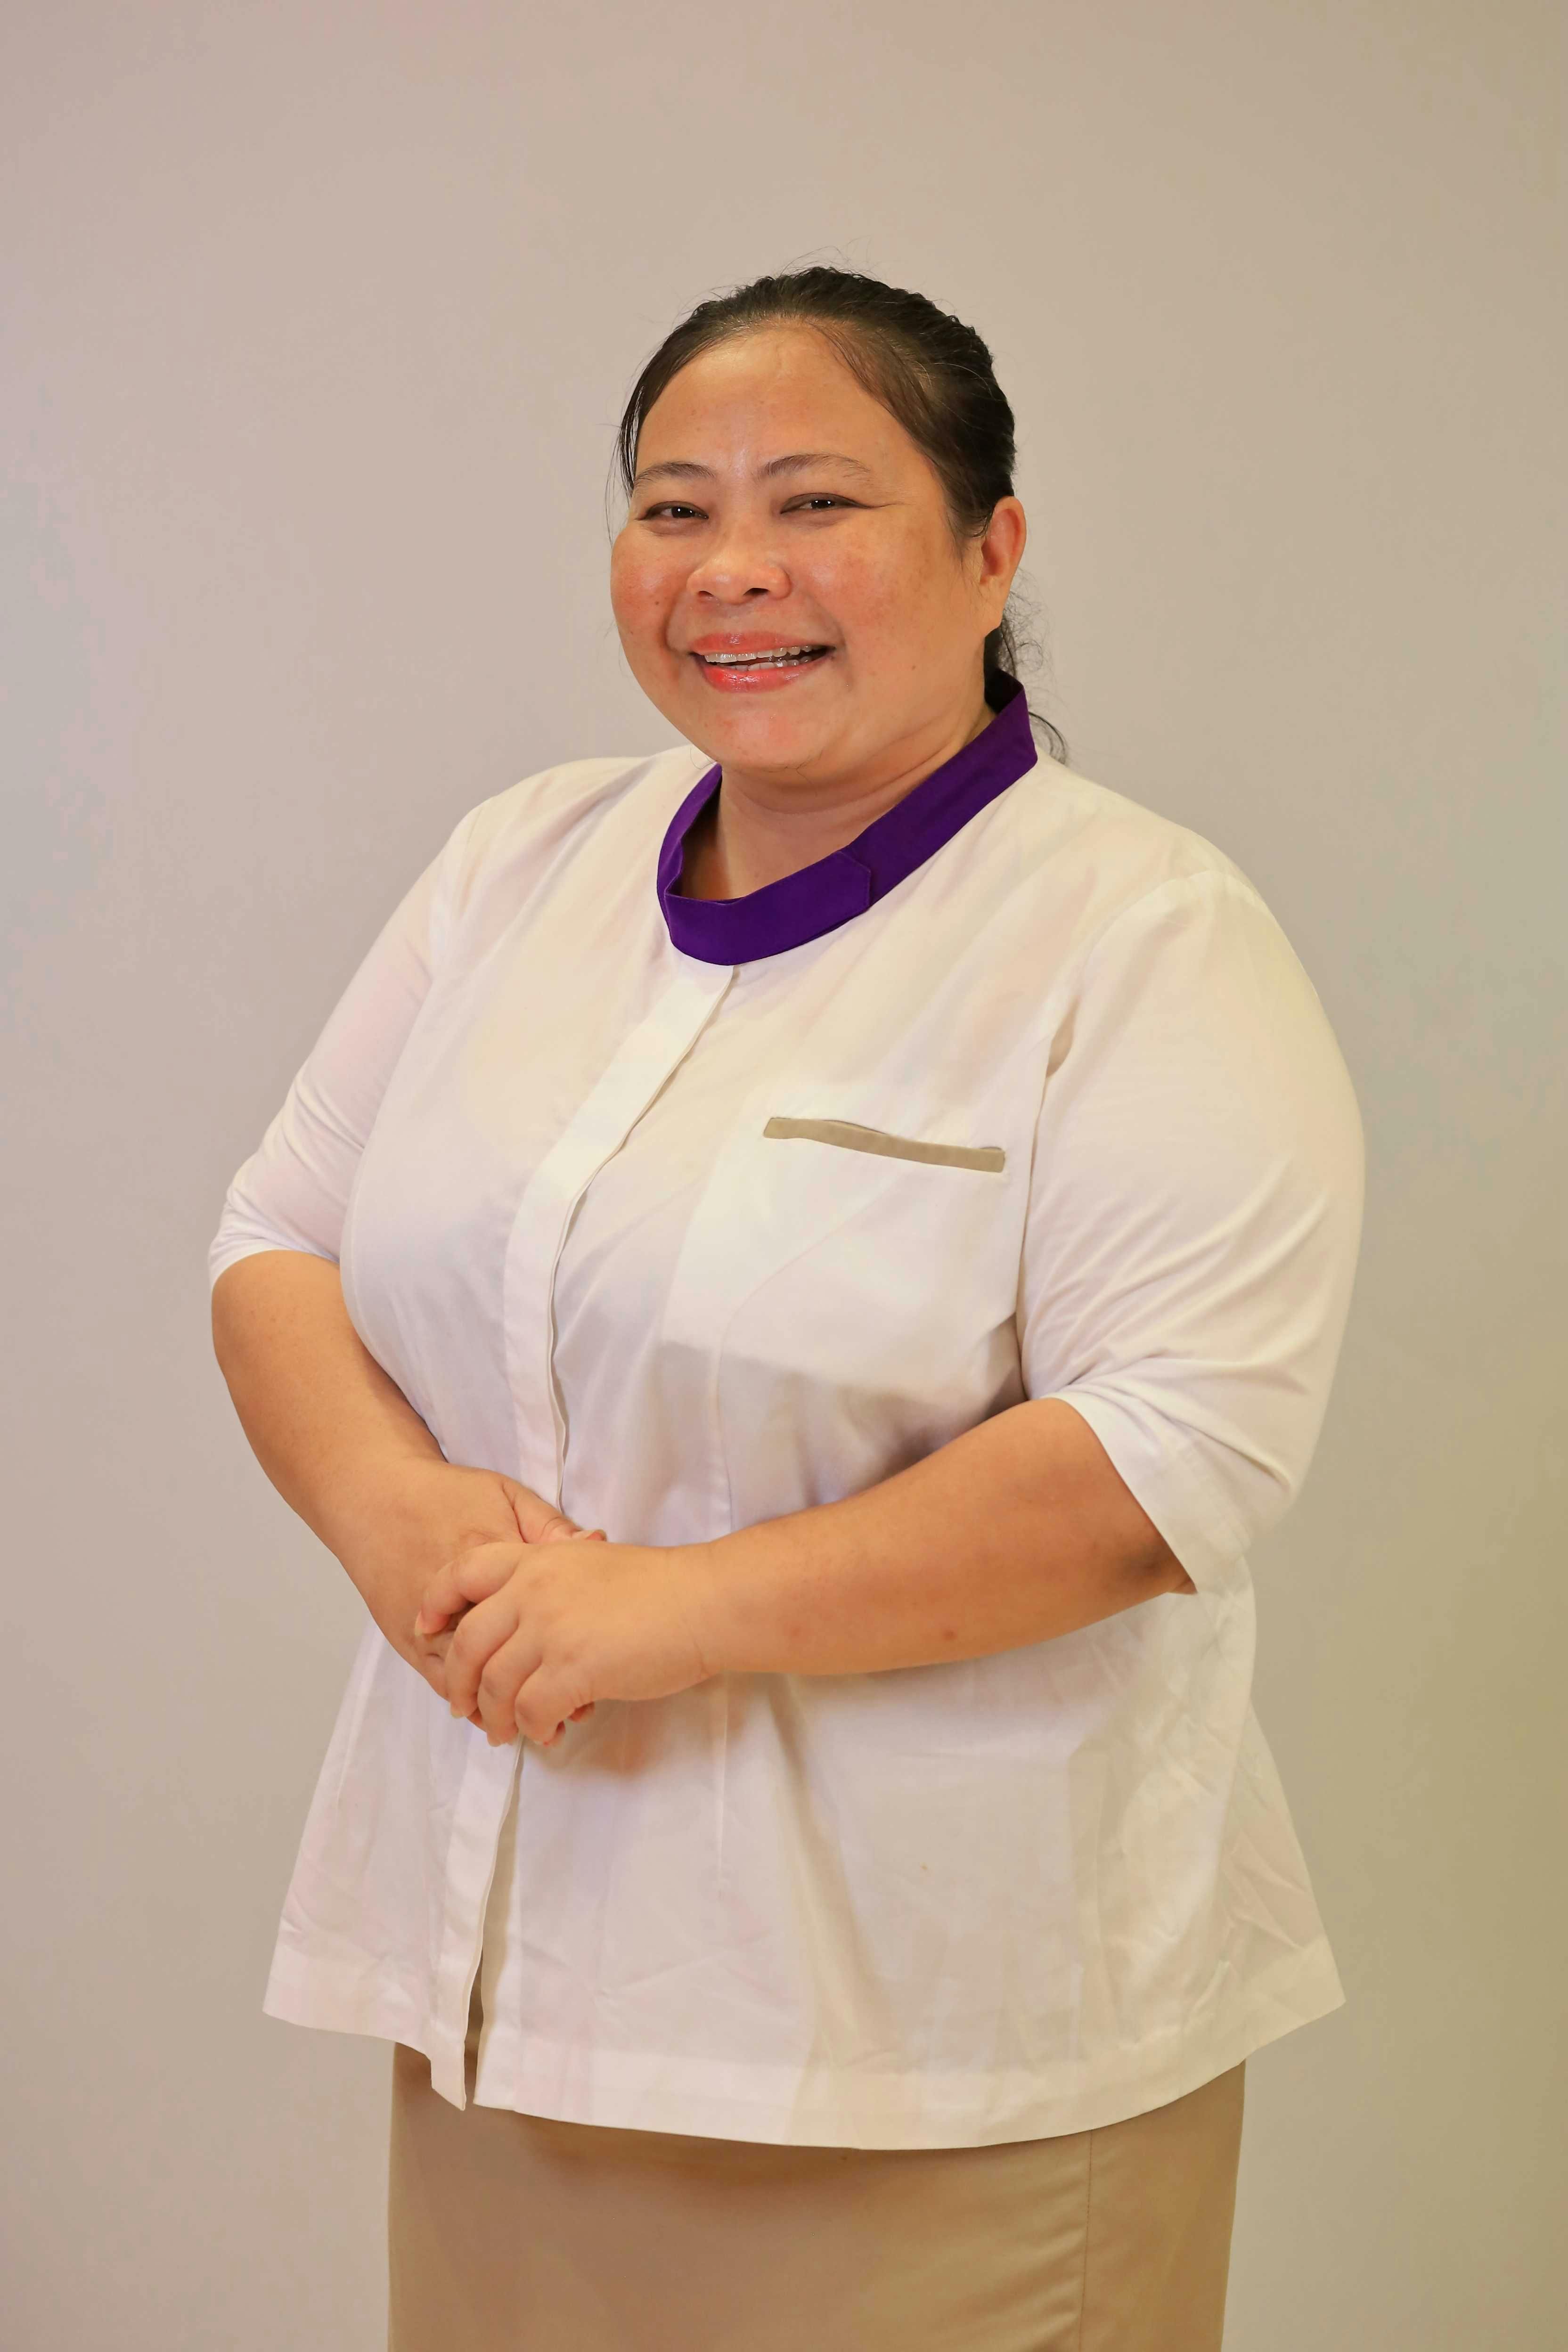 Teacher Somjai Phokaboot